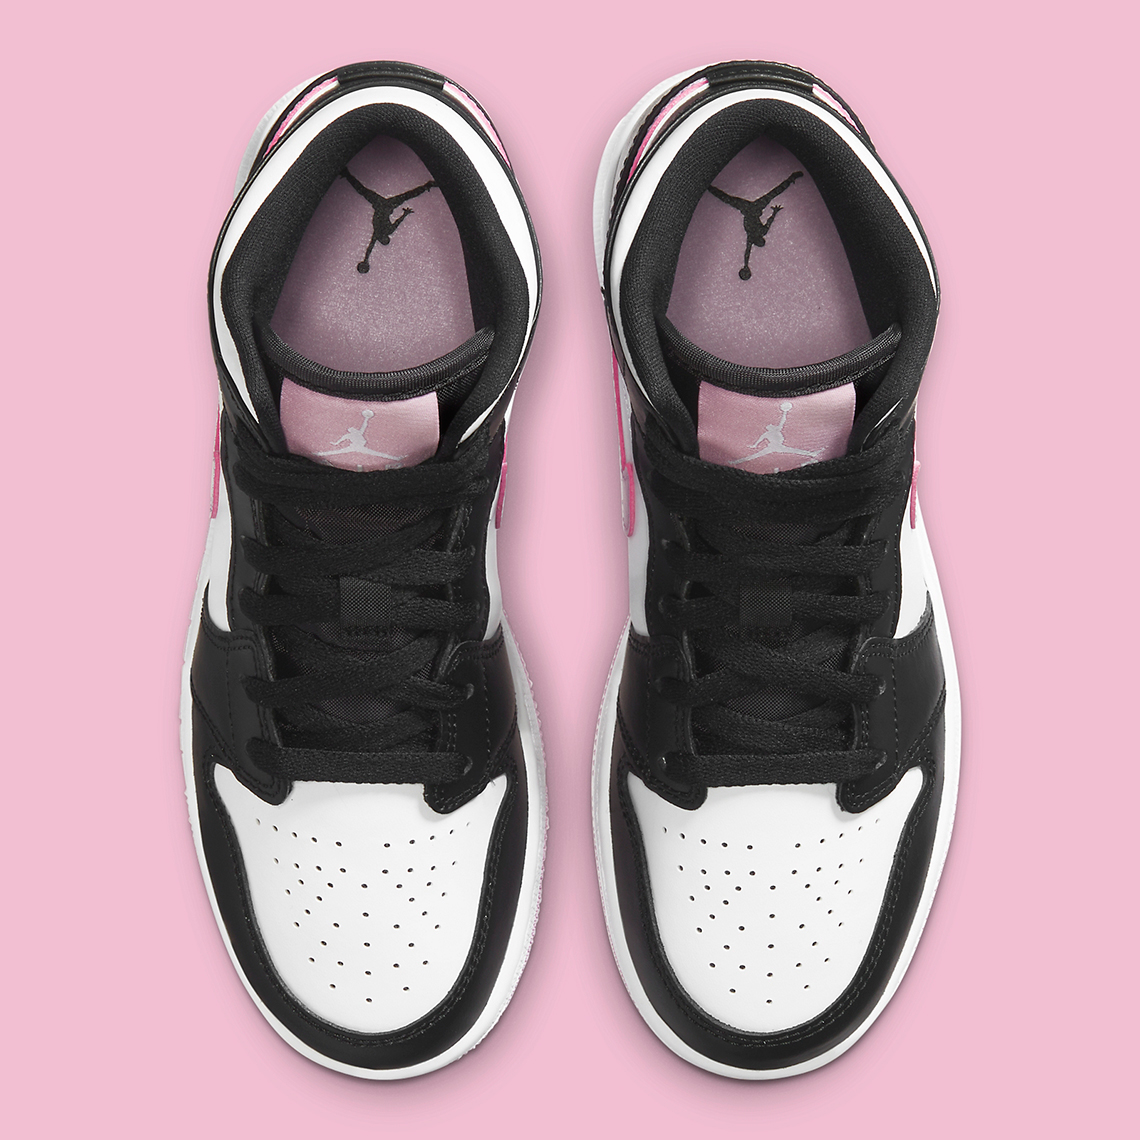 jordans black white and pink